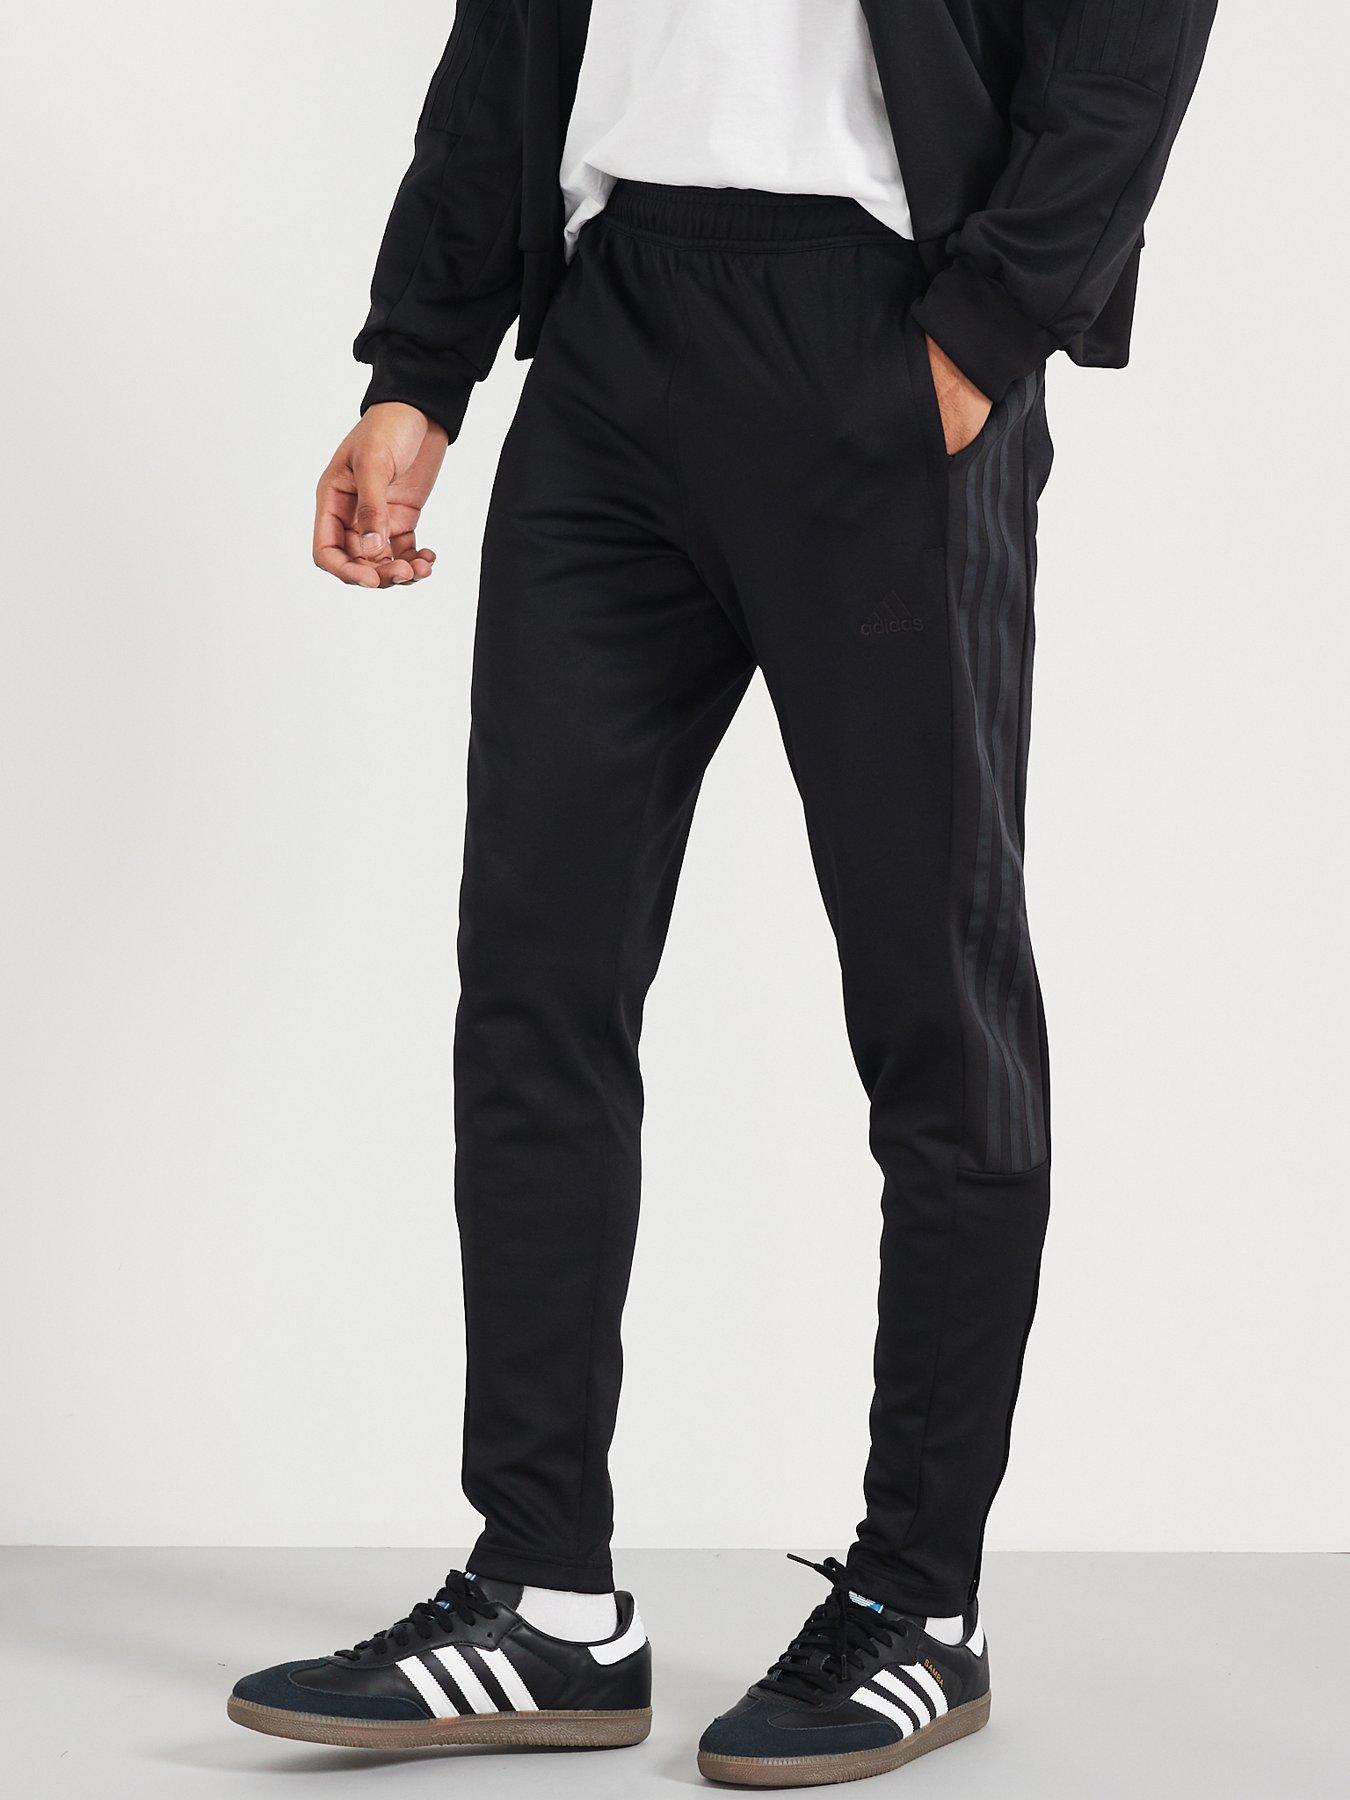 adidas mens Tiro Track Pants, Black/Dark Grey Heather, X-Small US :  : Clothing, Shoes & Accessories